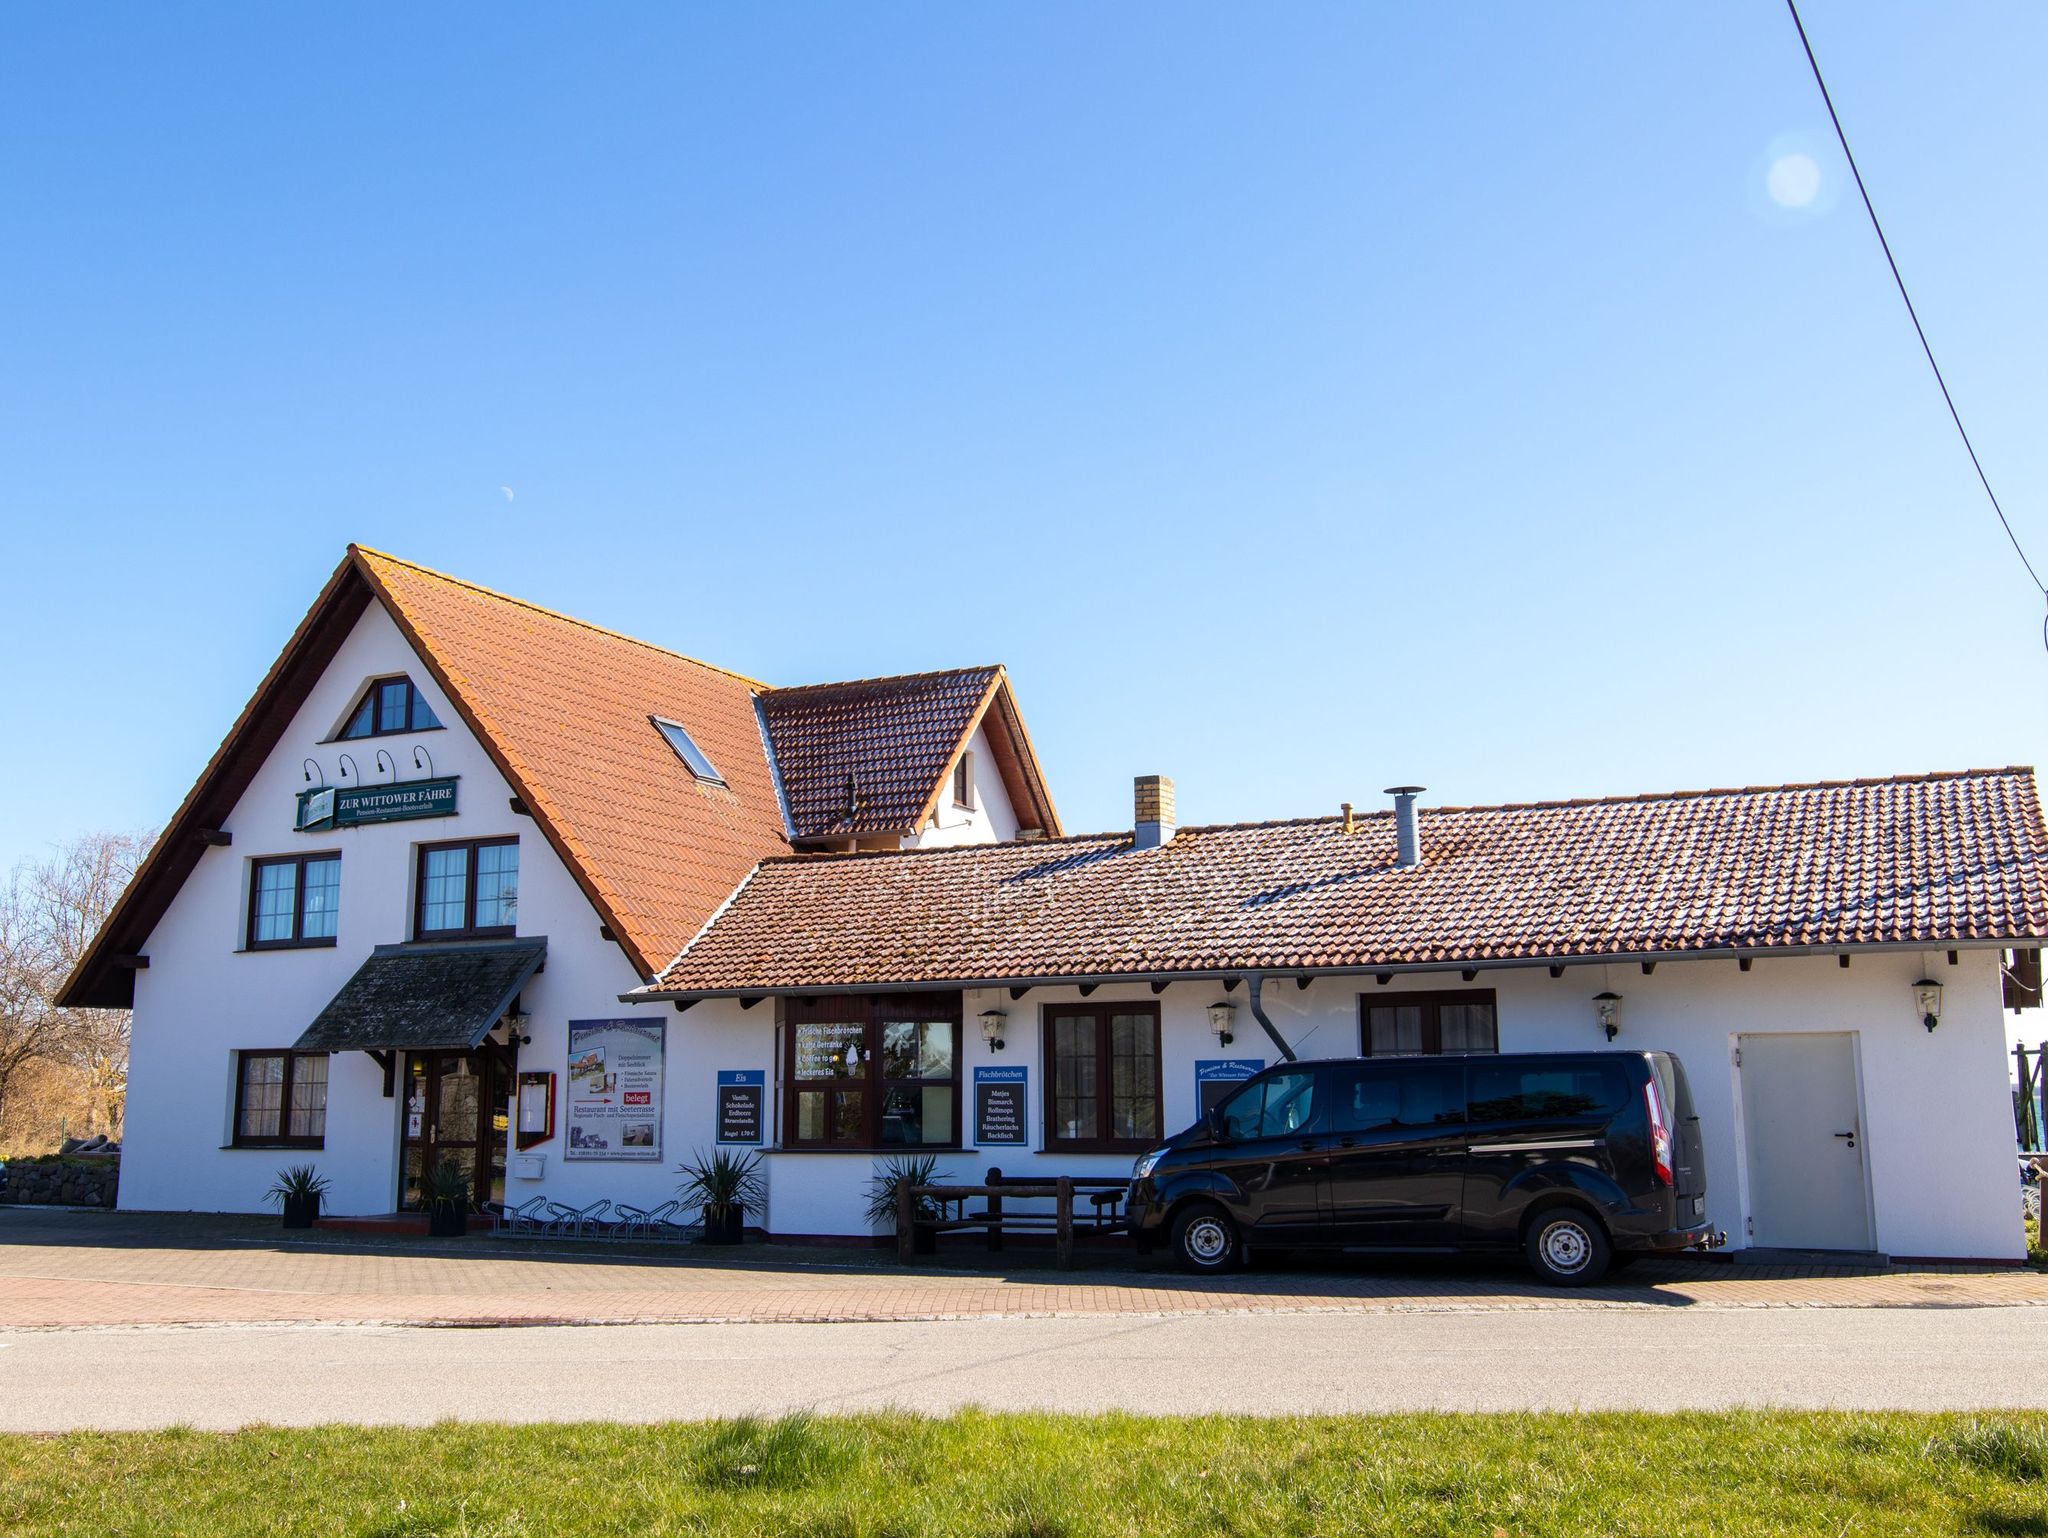 Umgebung Hotel Strandvilla Imperator auf der Insel Usedom